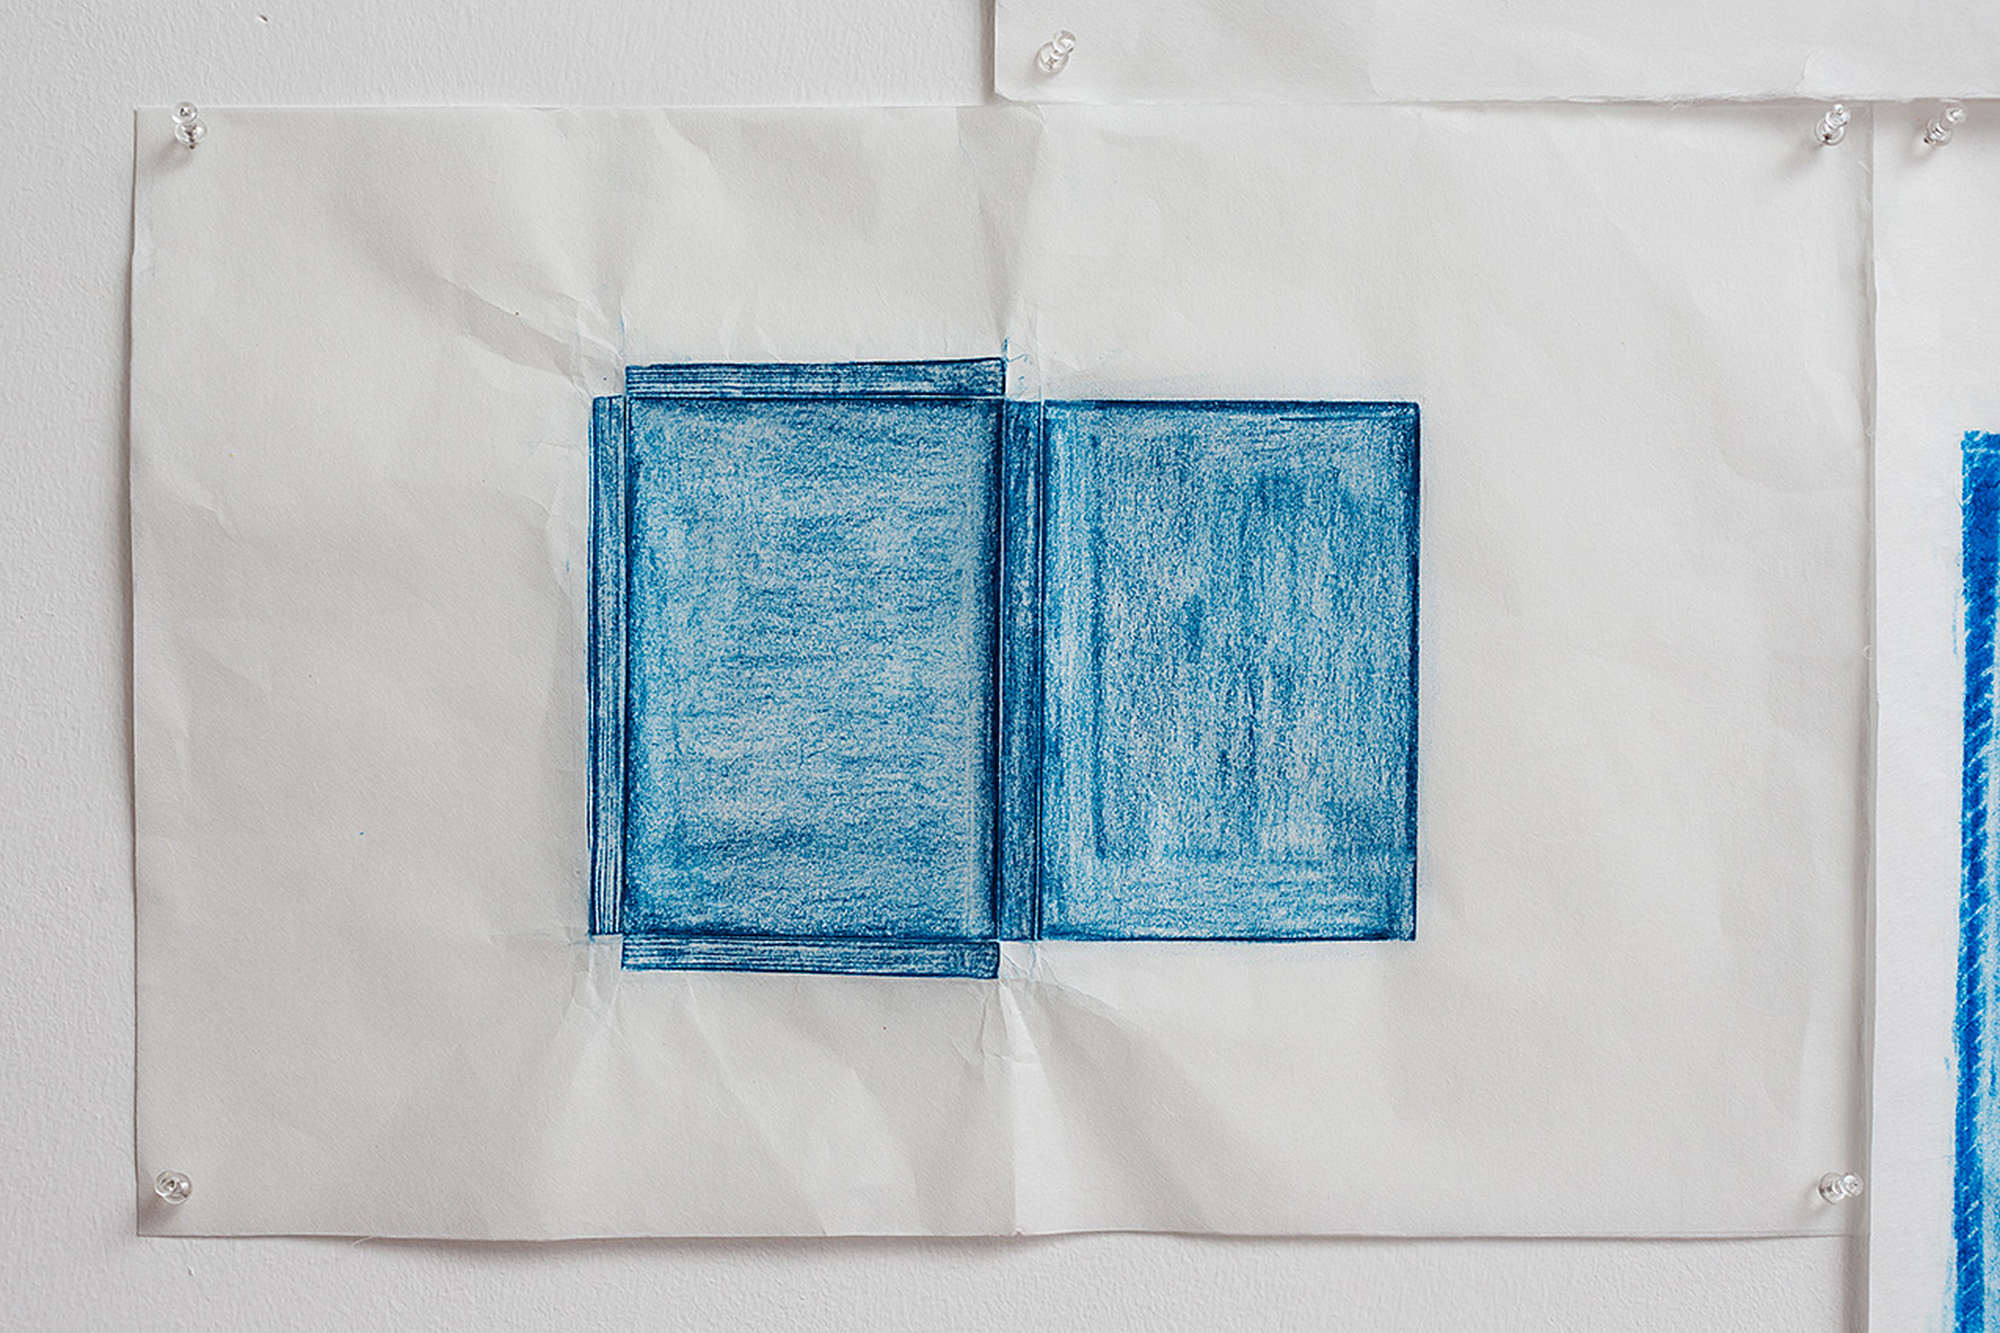 Jennifer Bornstein, Printed Matter, rubbing (encaustic and wax on Kozo paper), 49 x 64 cm, unique